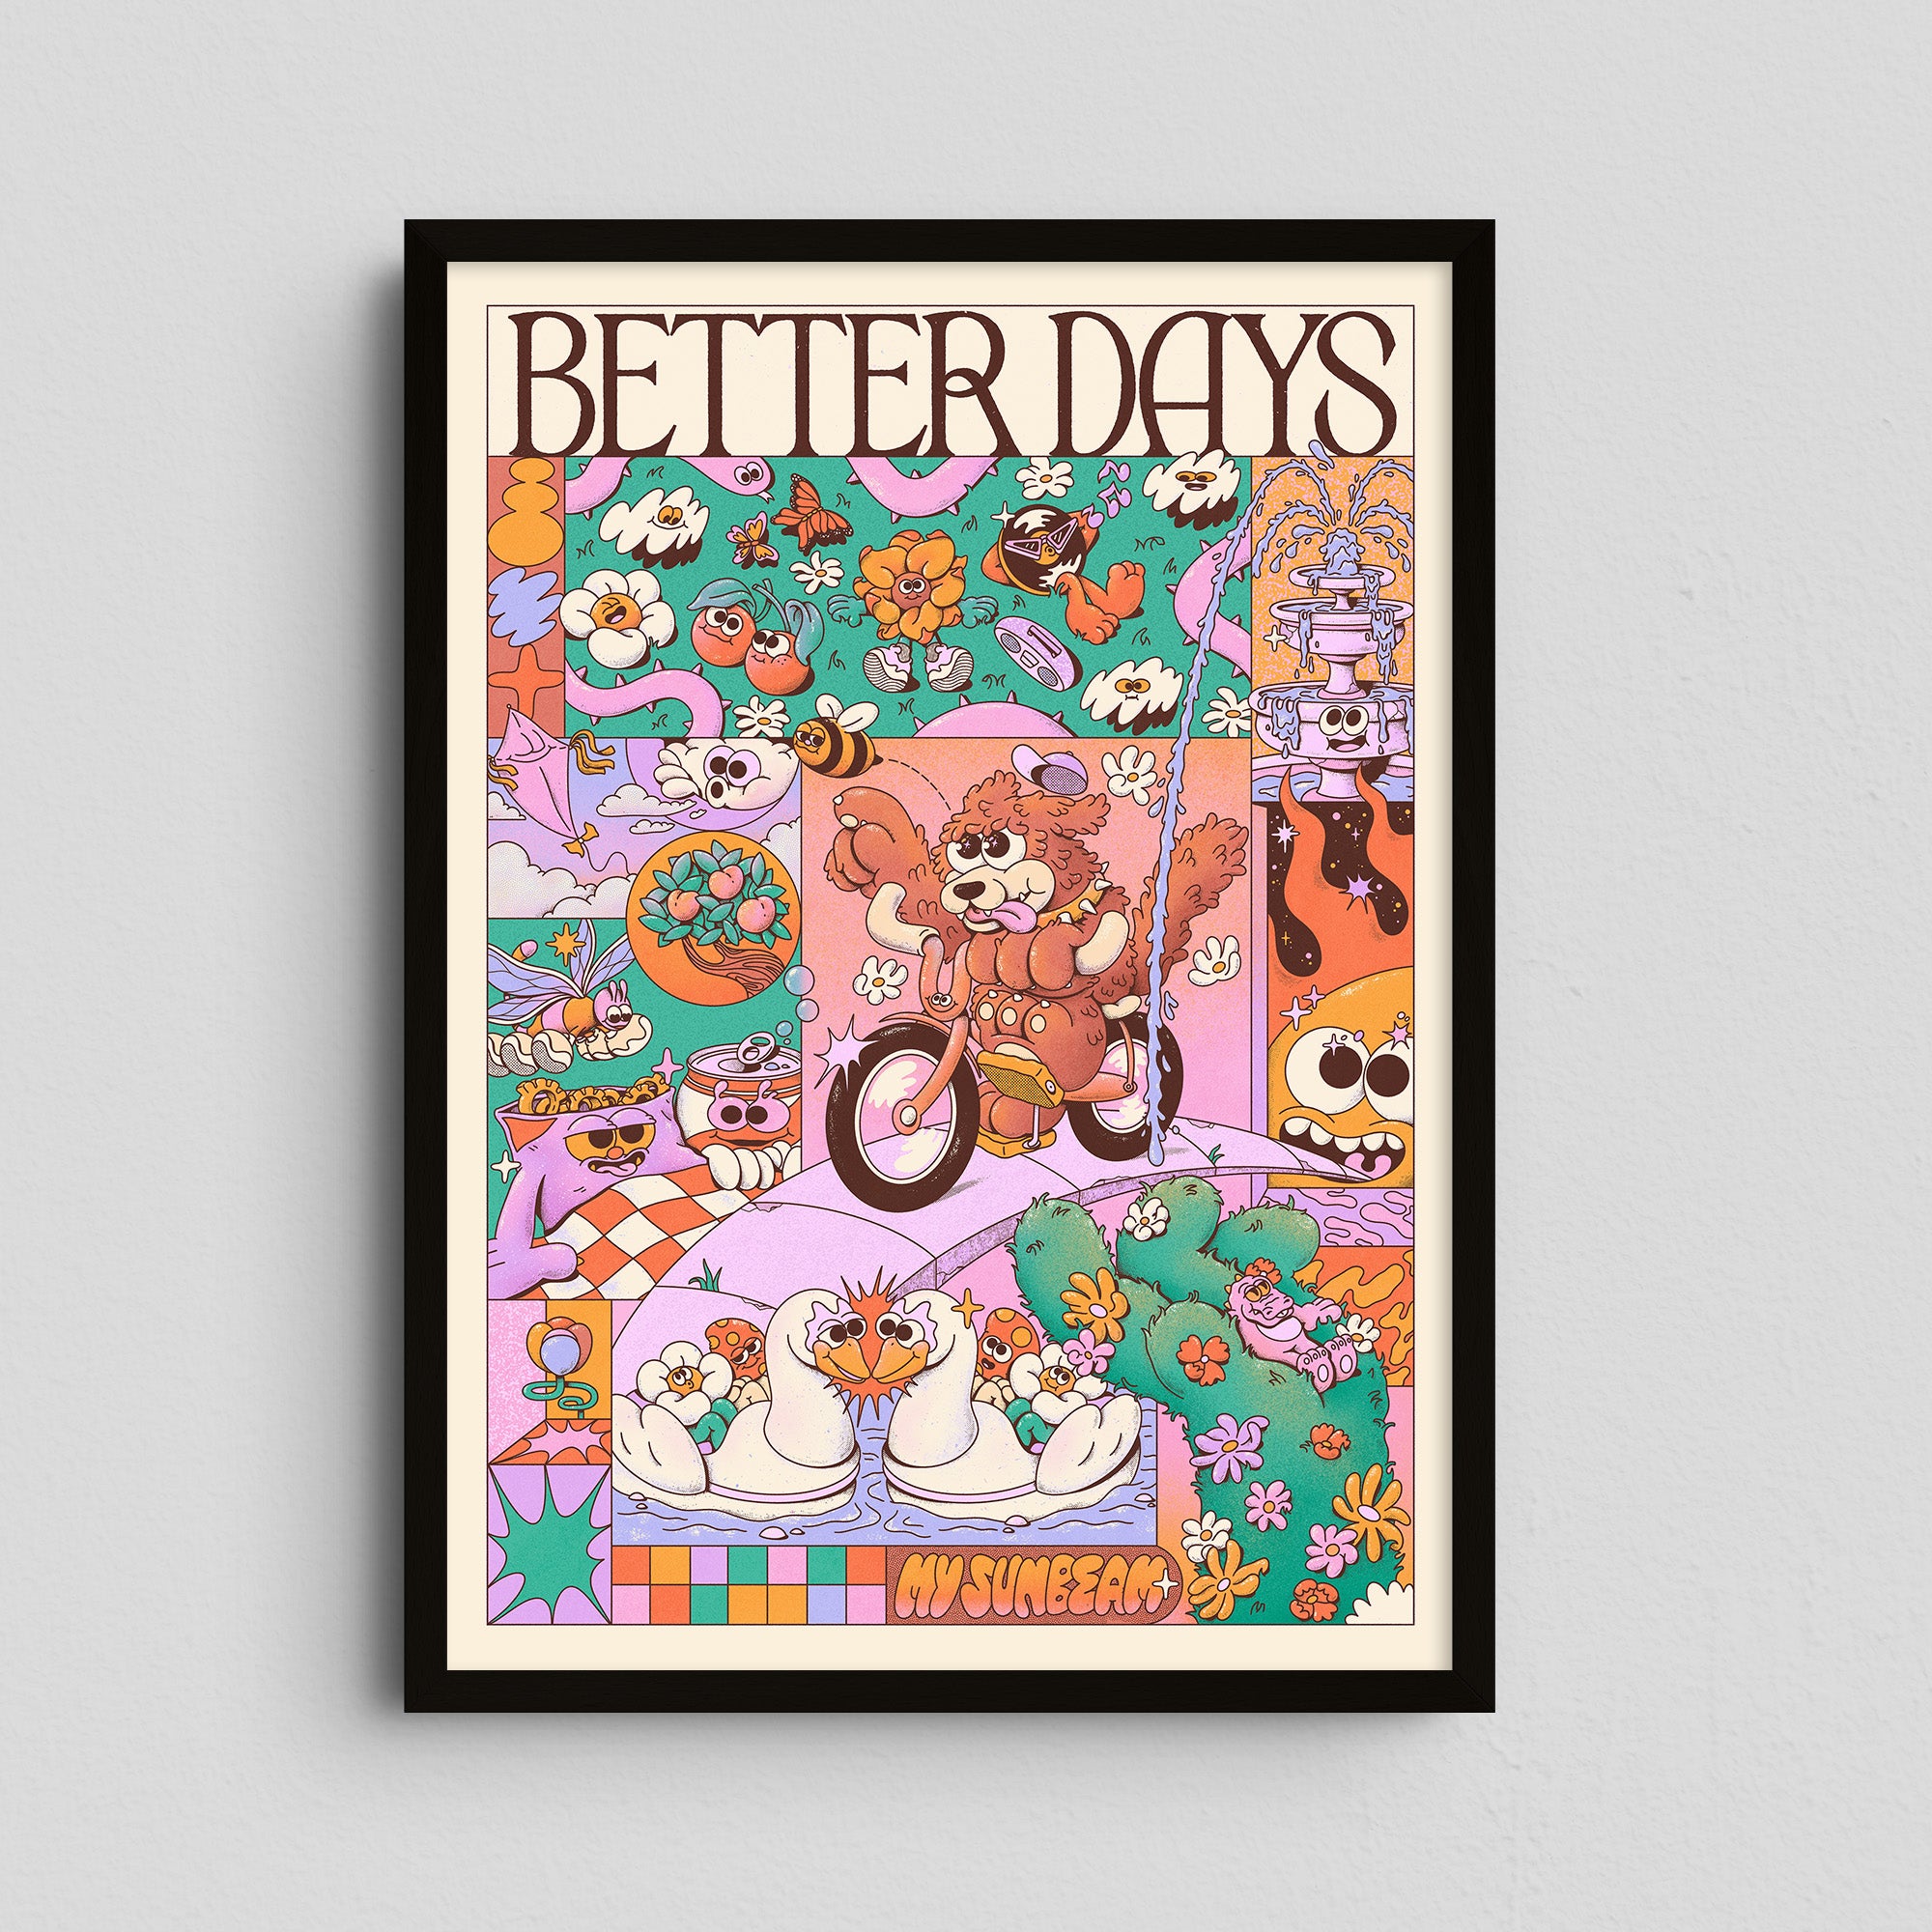 Better Days - My Sunbeam - Limited Edition